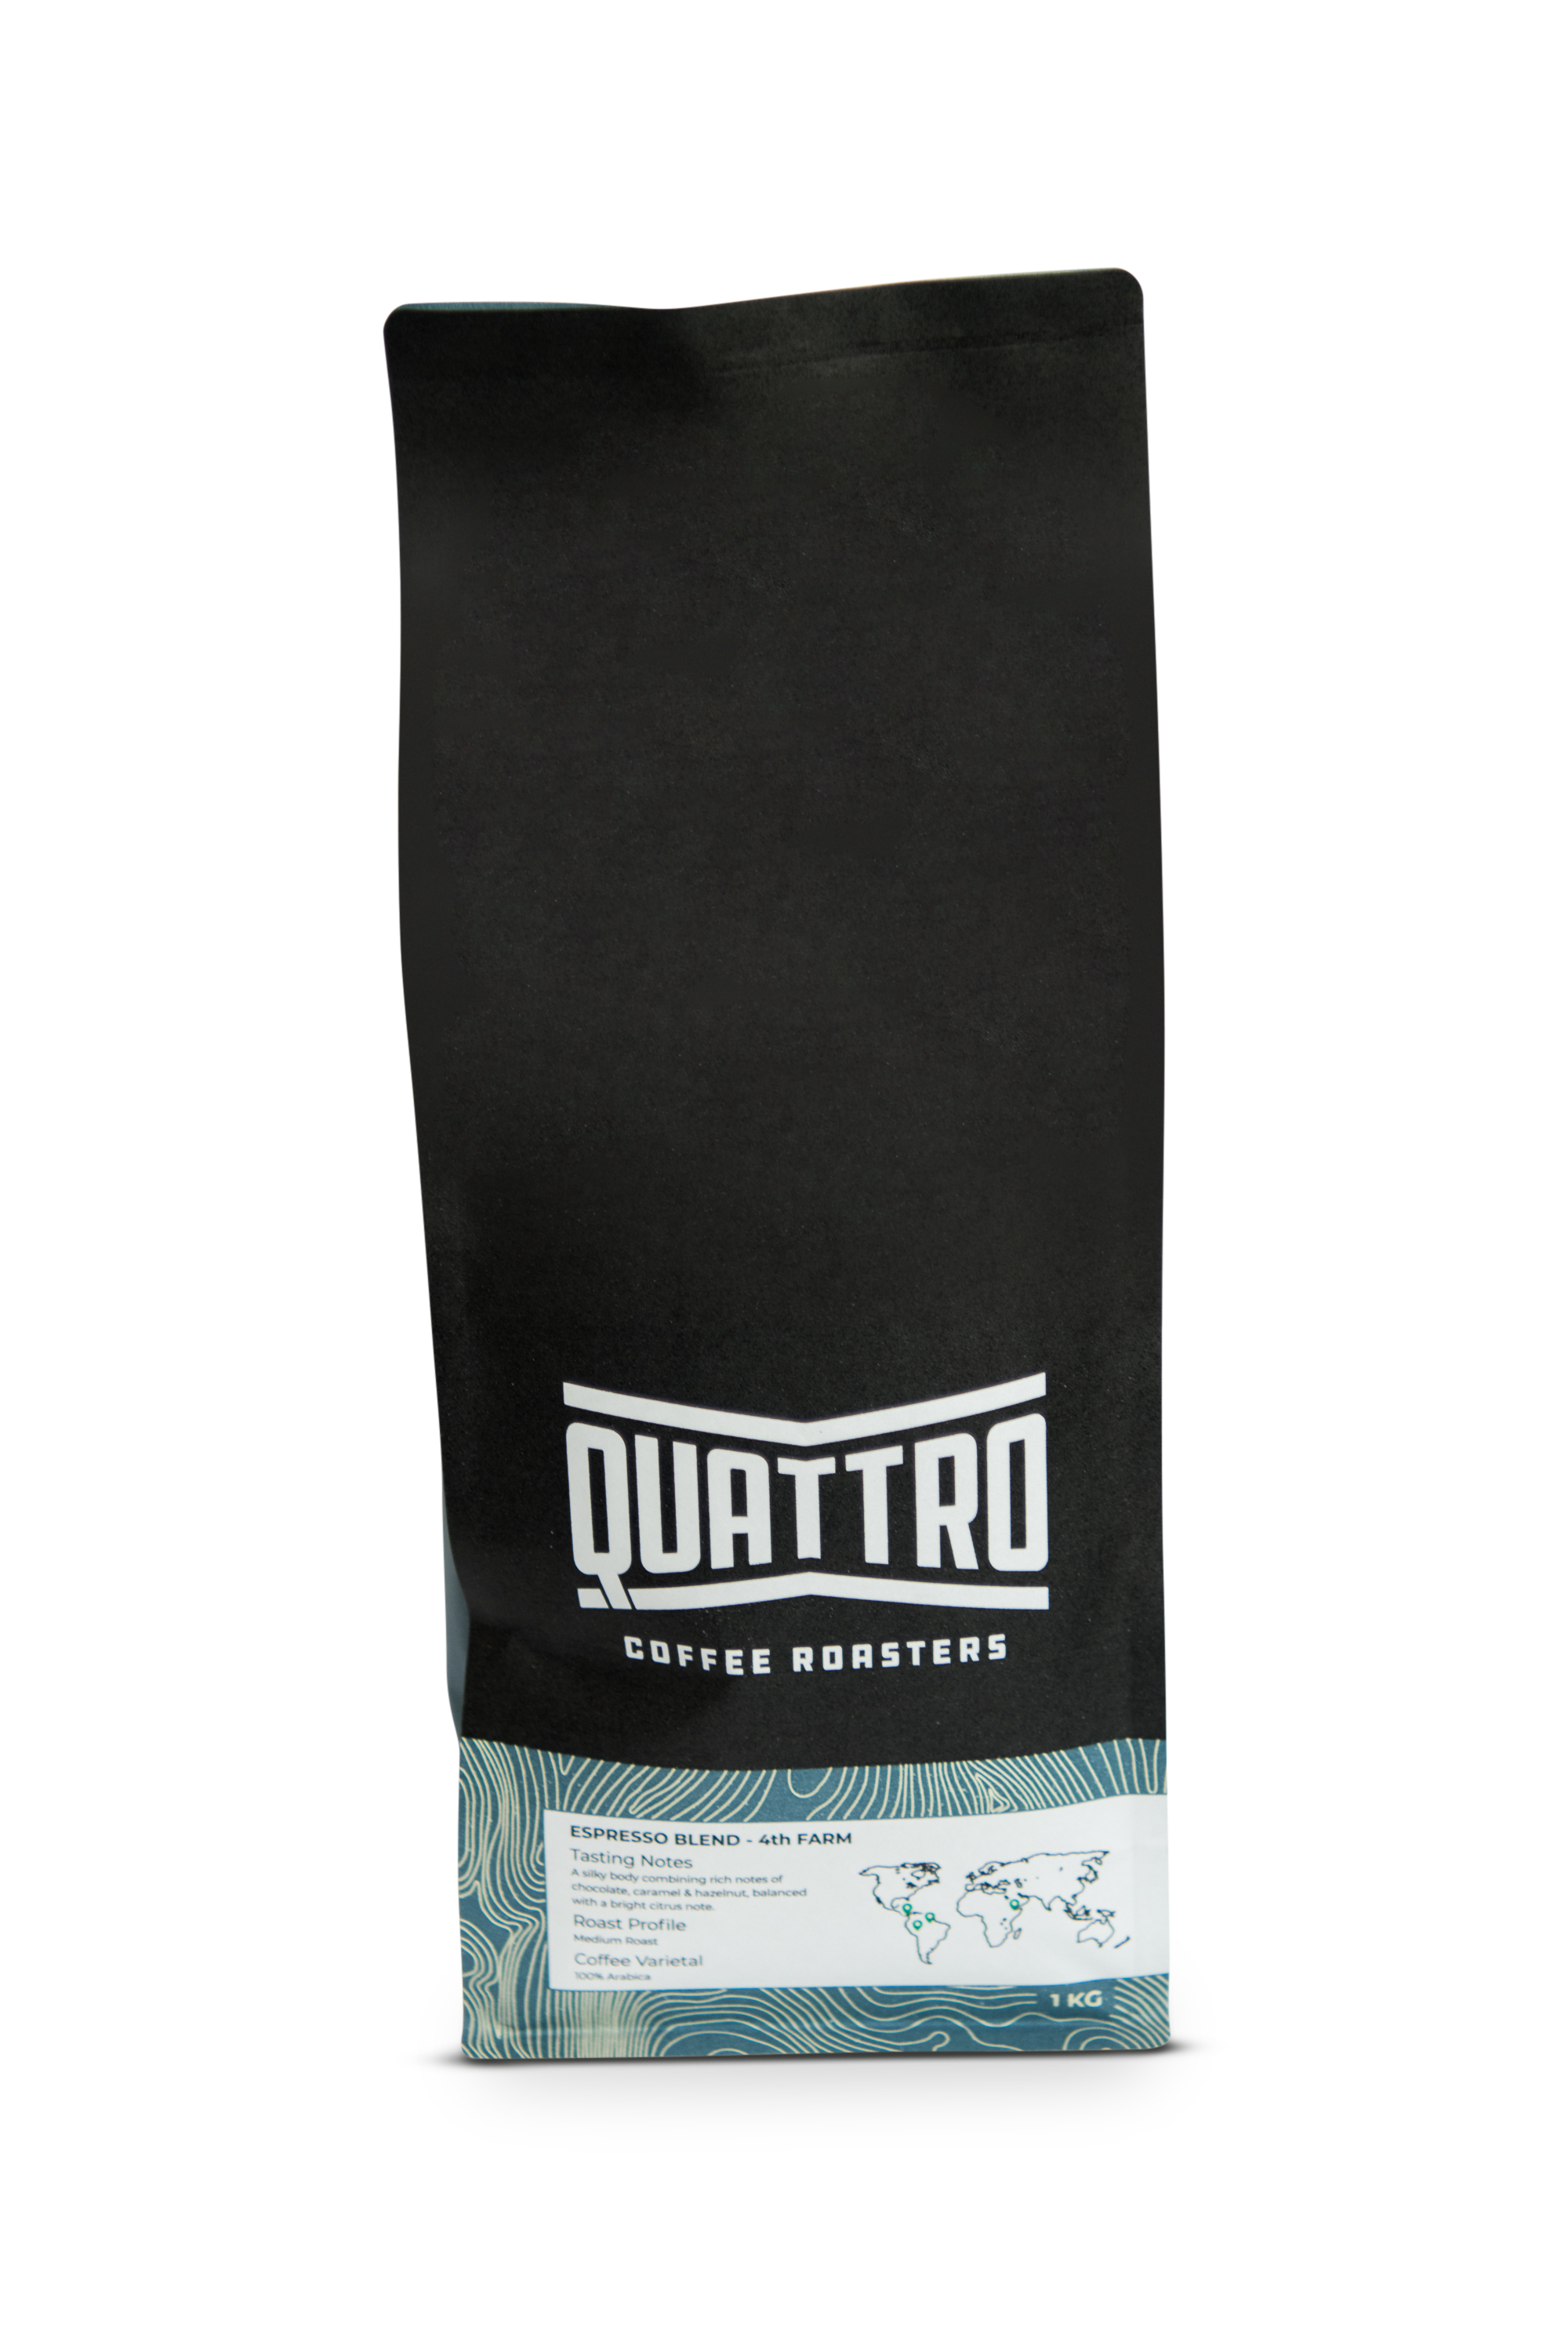 Quattro Specialty Coffee beans 1 kg Bag